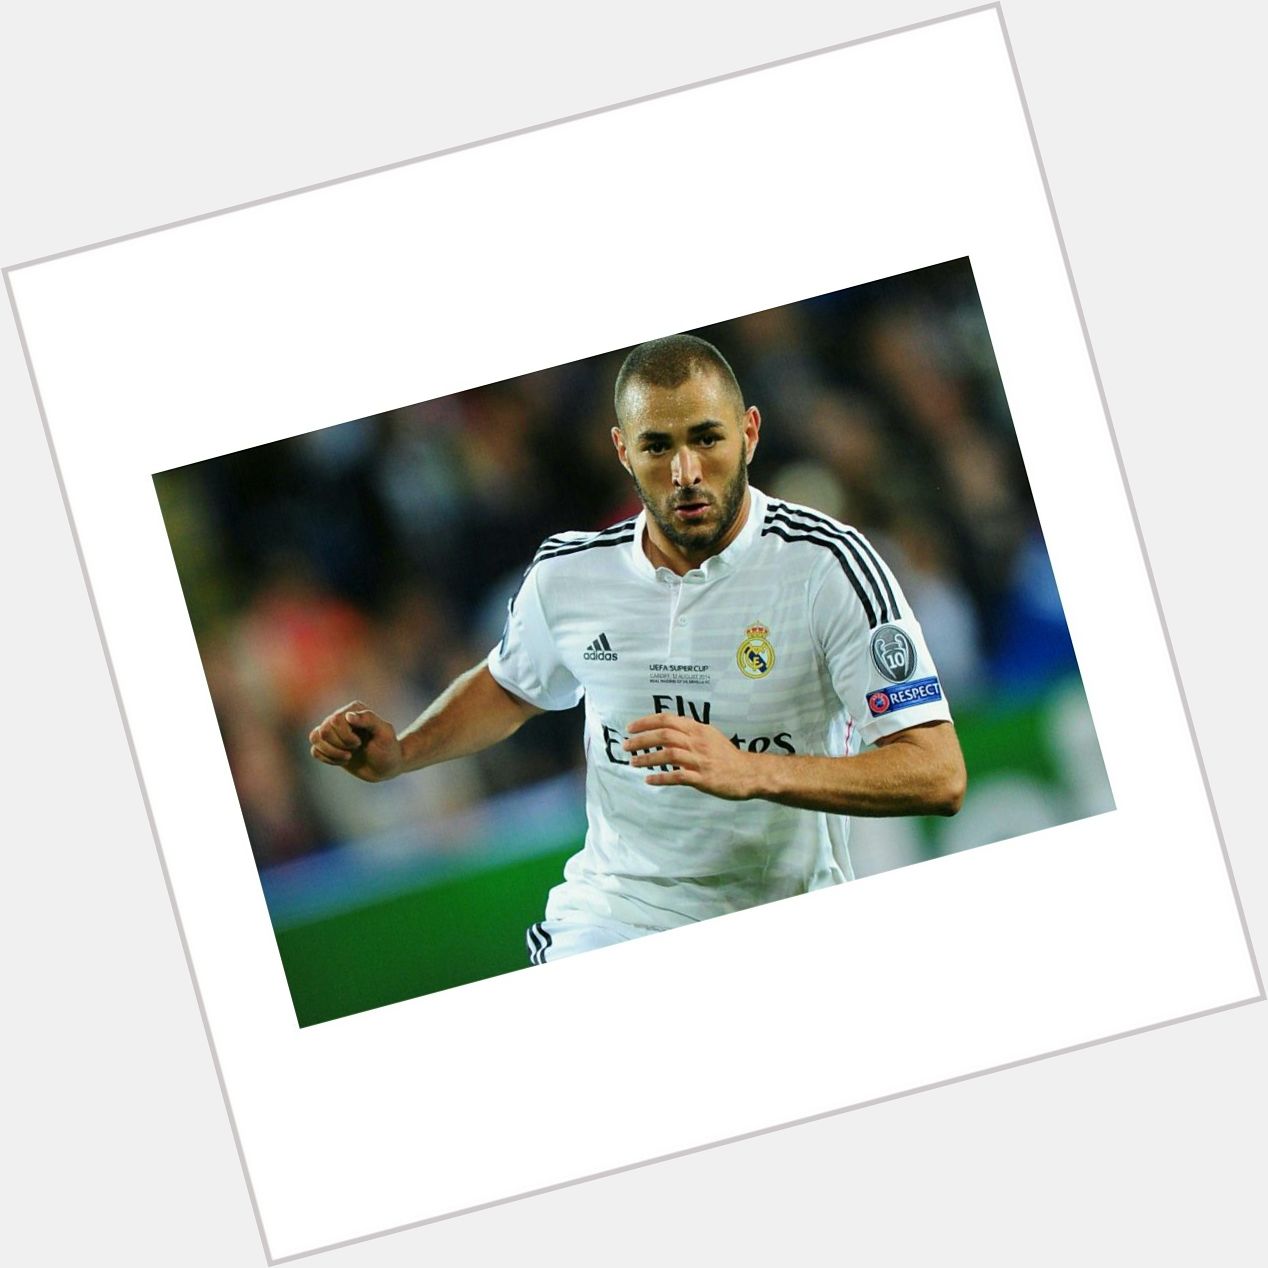 Joyeux anniversaire Karim Benzema!/Happy birthday Karim Benzema!   